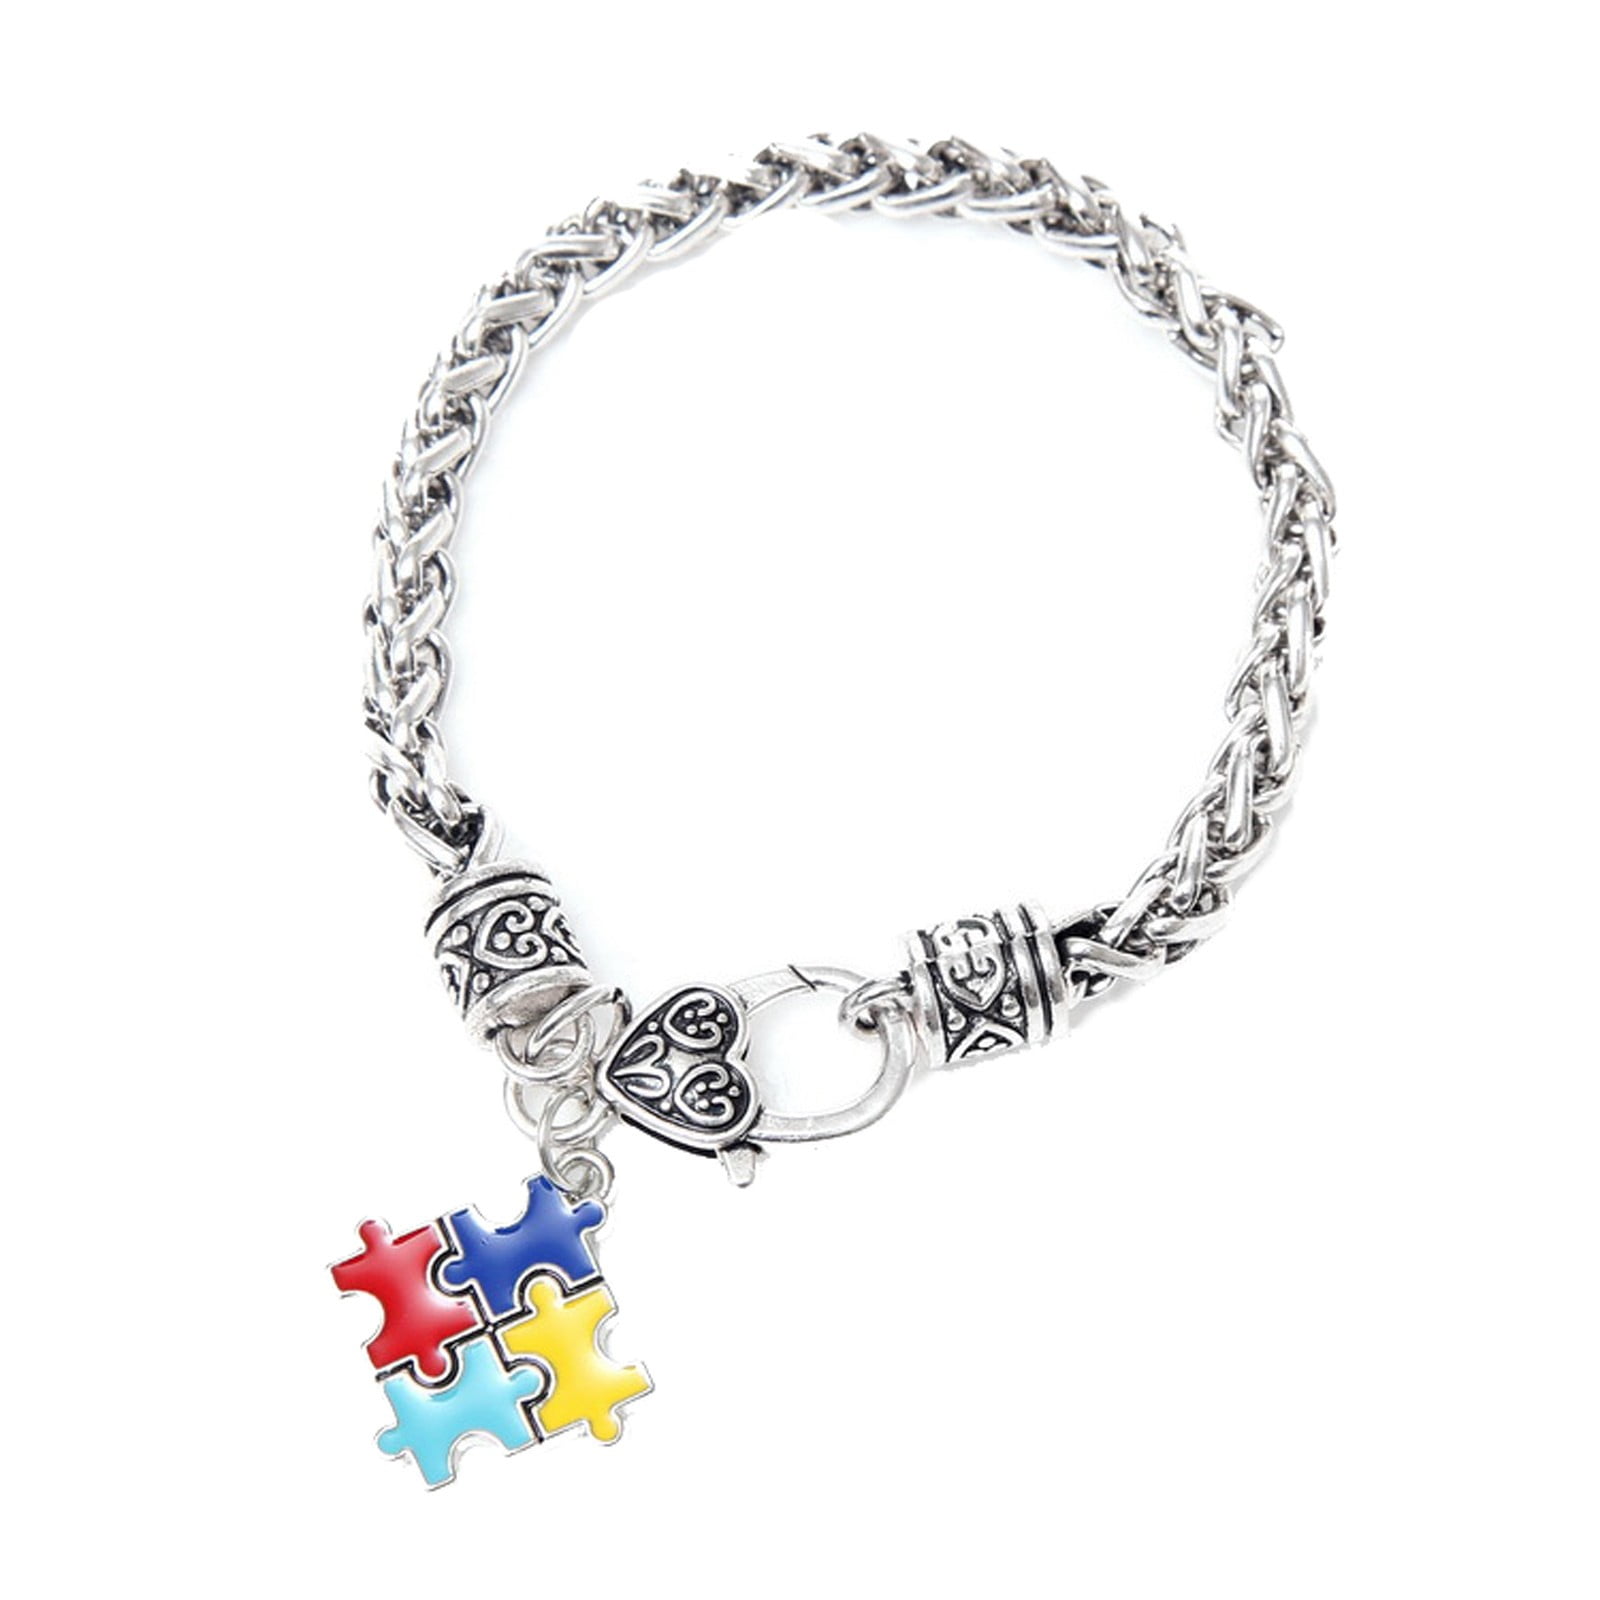 Buy Puzzle Bracelet, Puzzle Piece Jewelry, Puzzle Jewelry, Friendship  Bracelet Online in India - Etsy